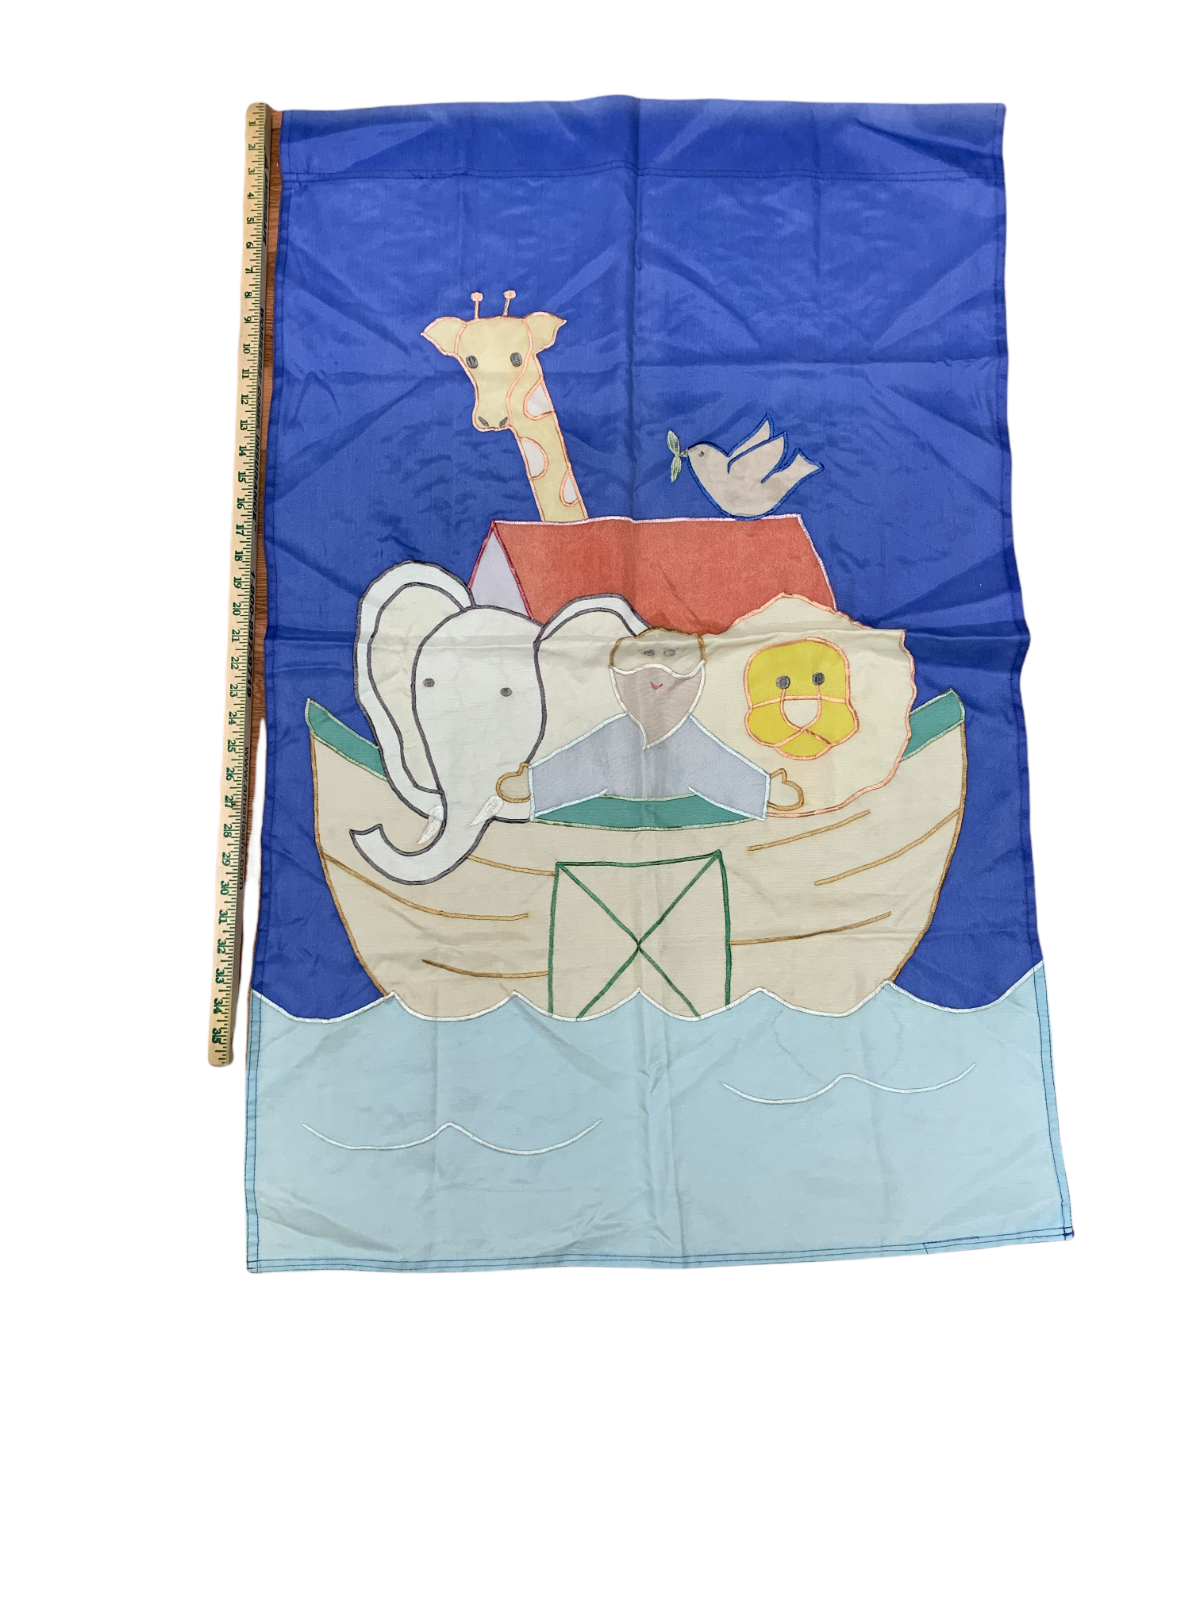 Noah's Ark Garden Spring House Flag Banner 27in x 38in Colorful - $10.64